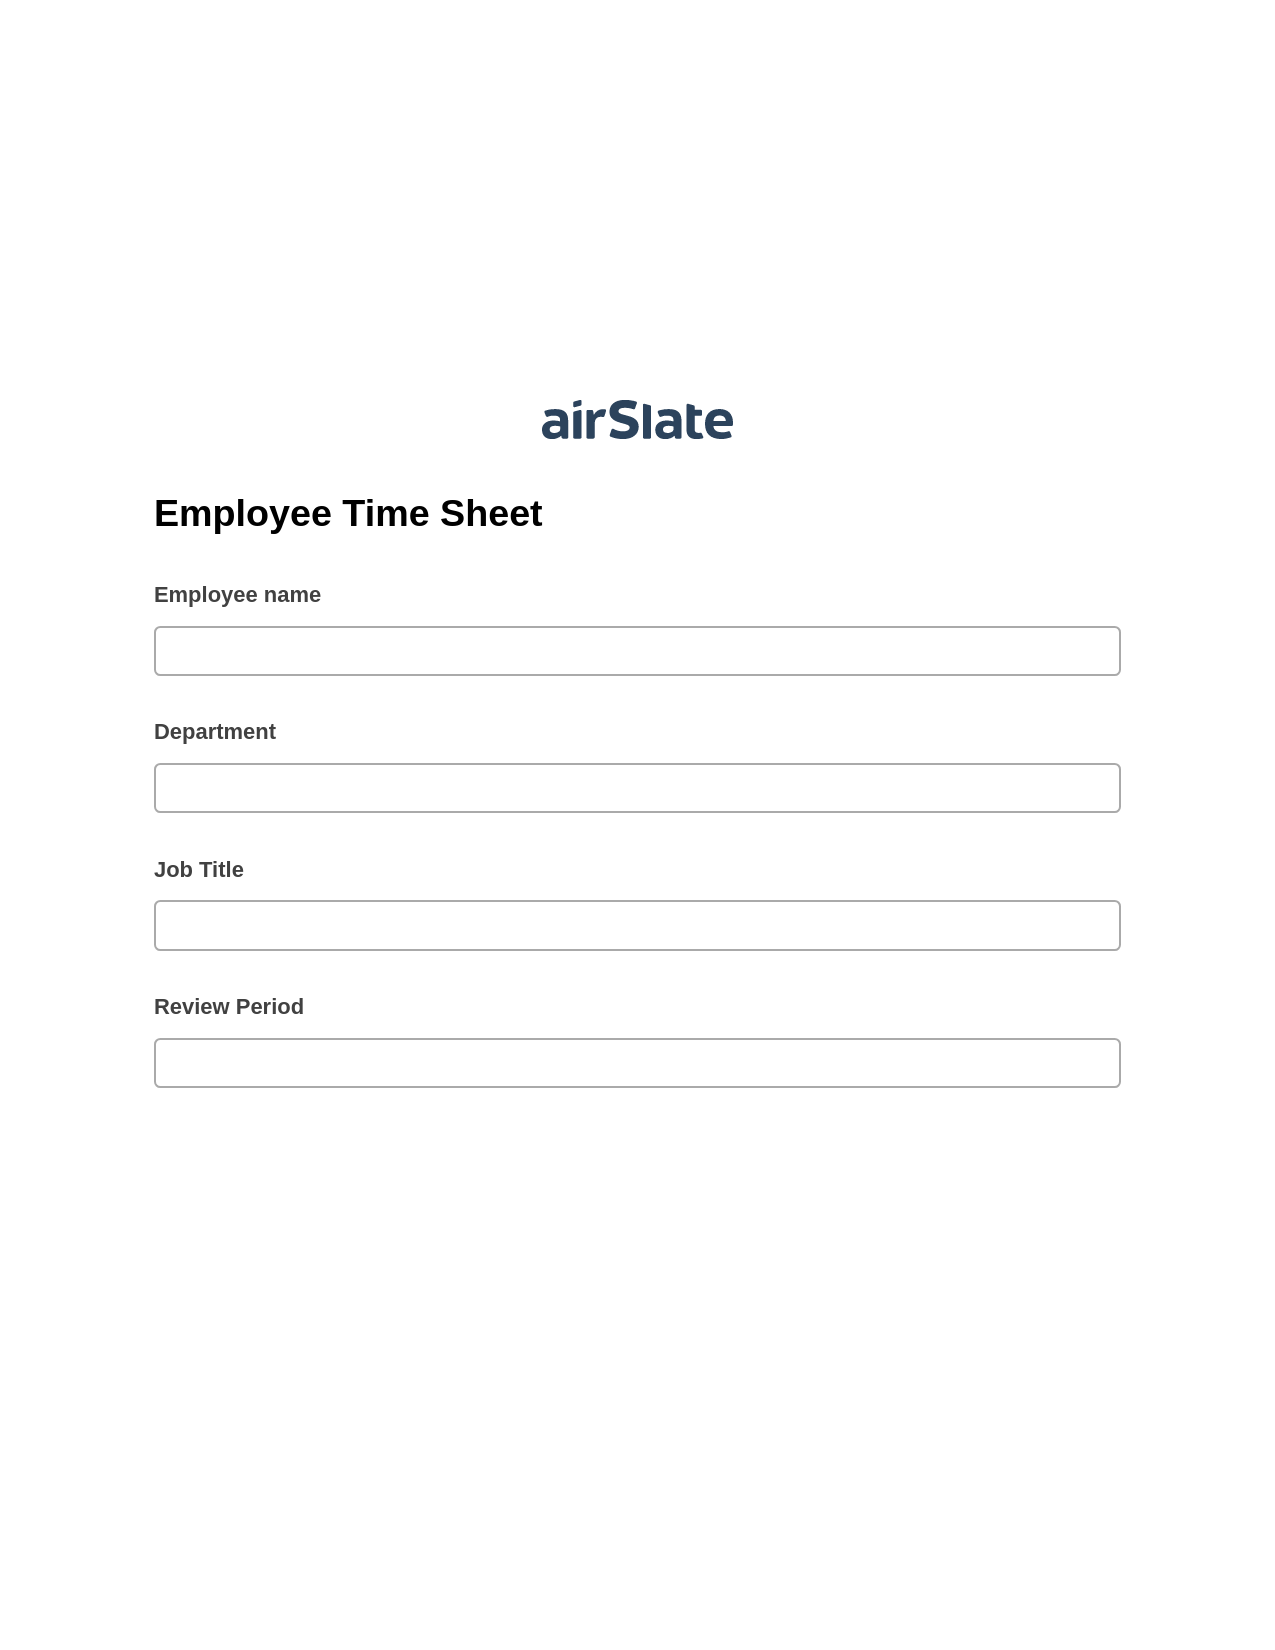 Employee Time Sheet Pre-fill from Google Sheets Bot, Slack Notification Bot, Archive to Dropbox Bot